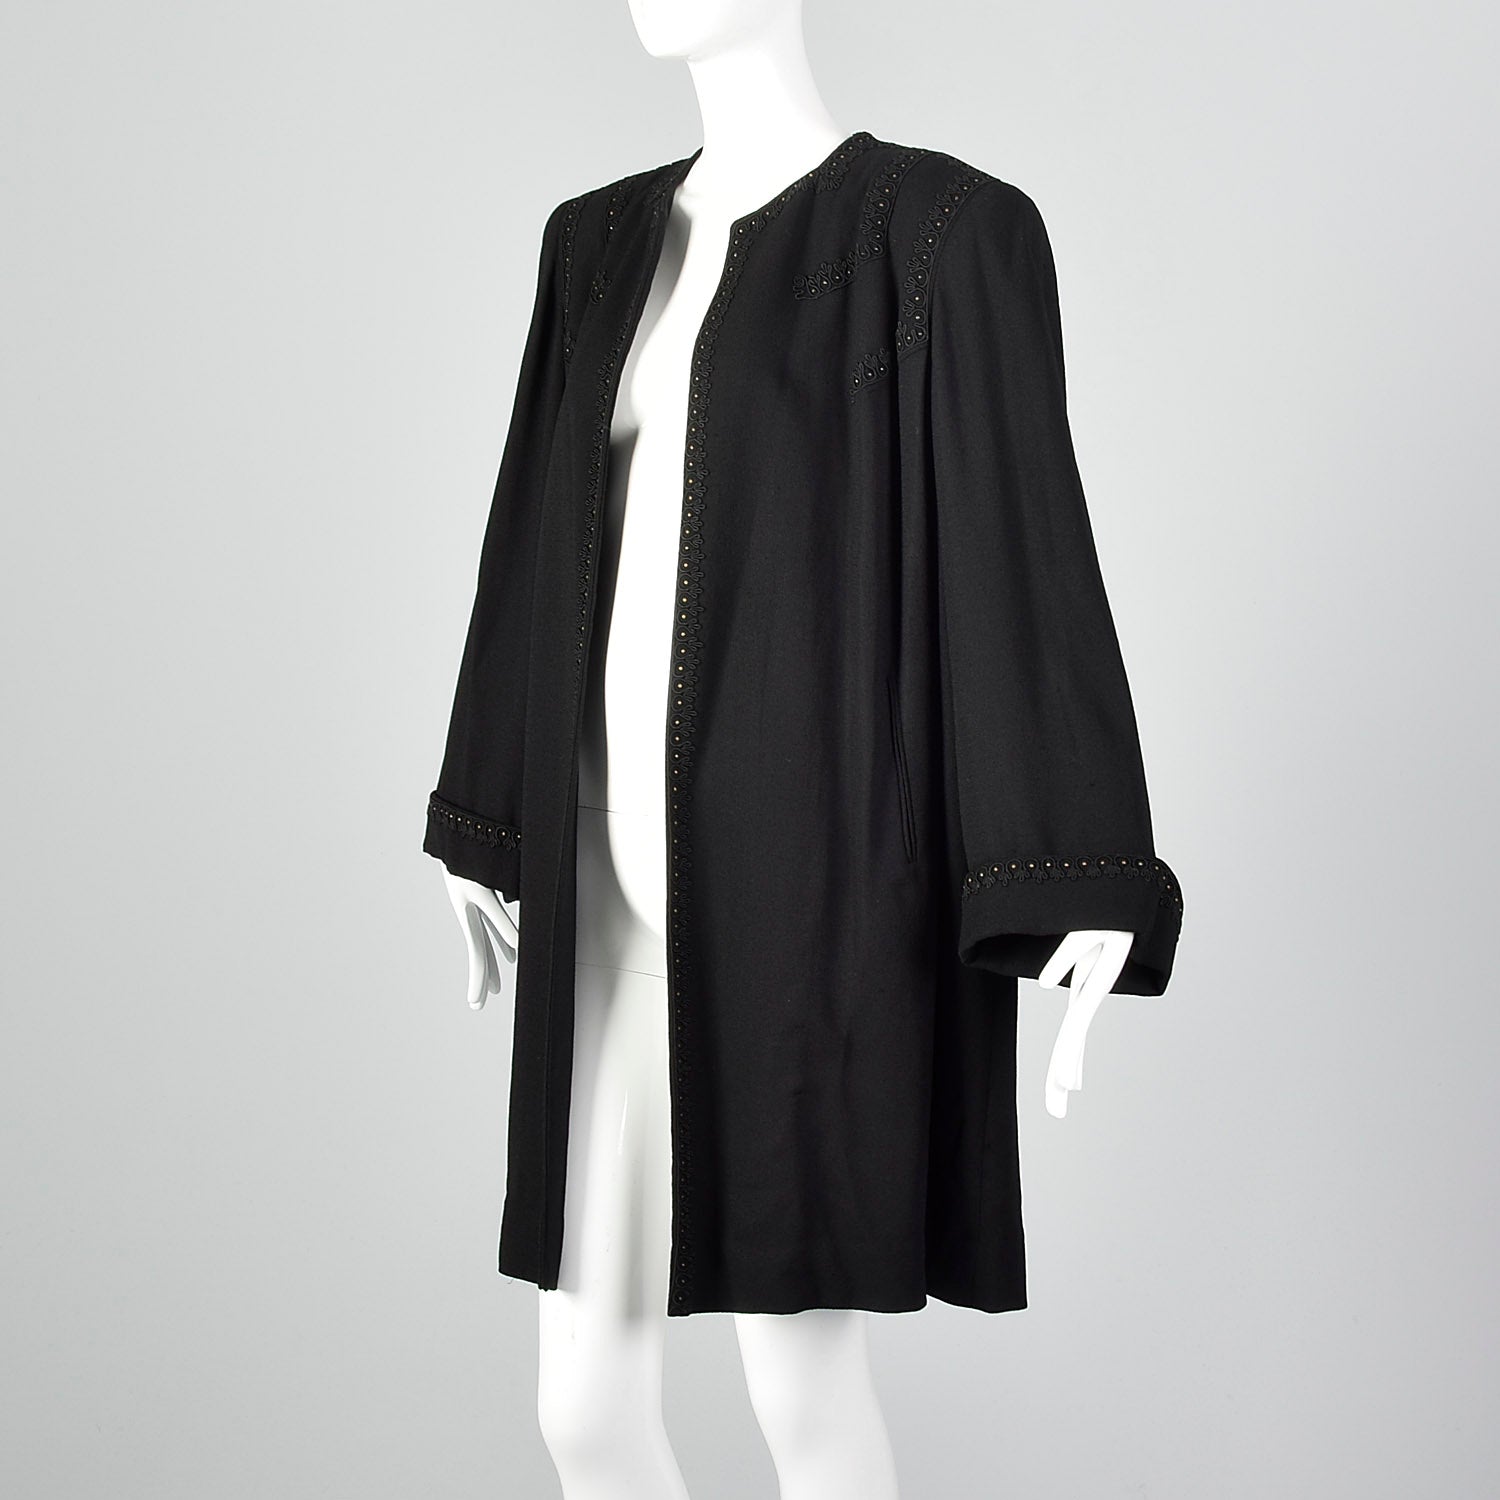 1940s Black Swing Coat with Soutache & Studs